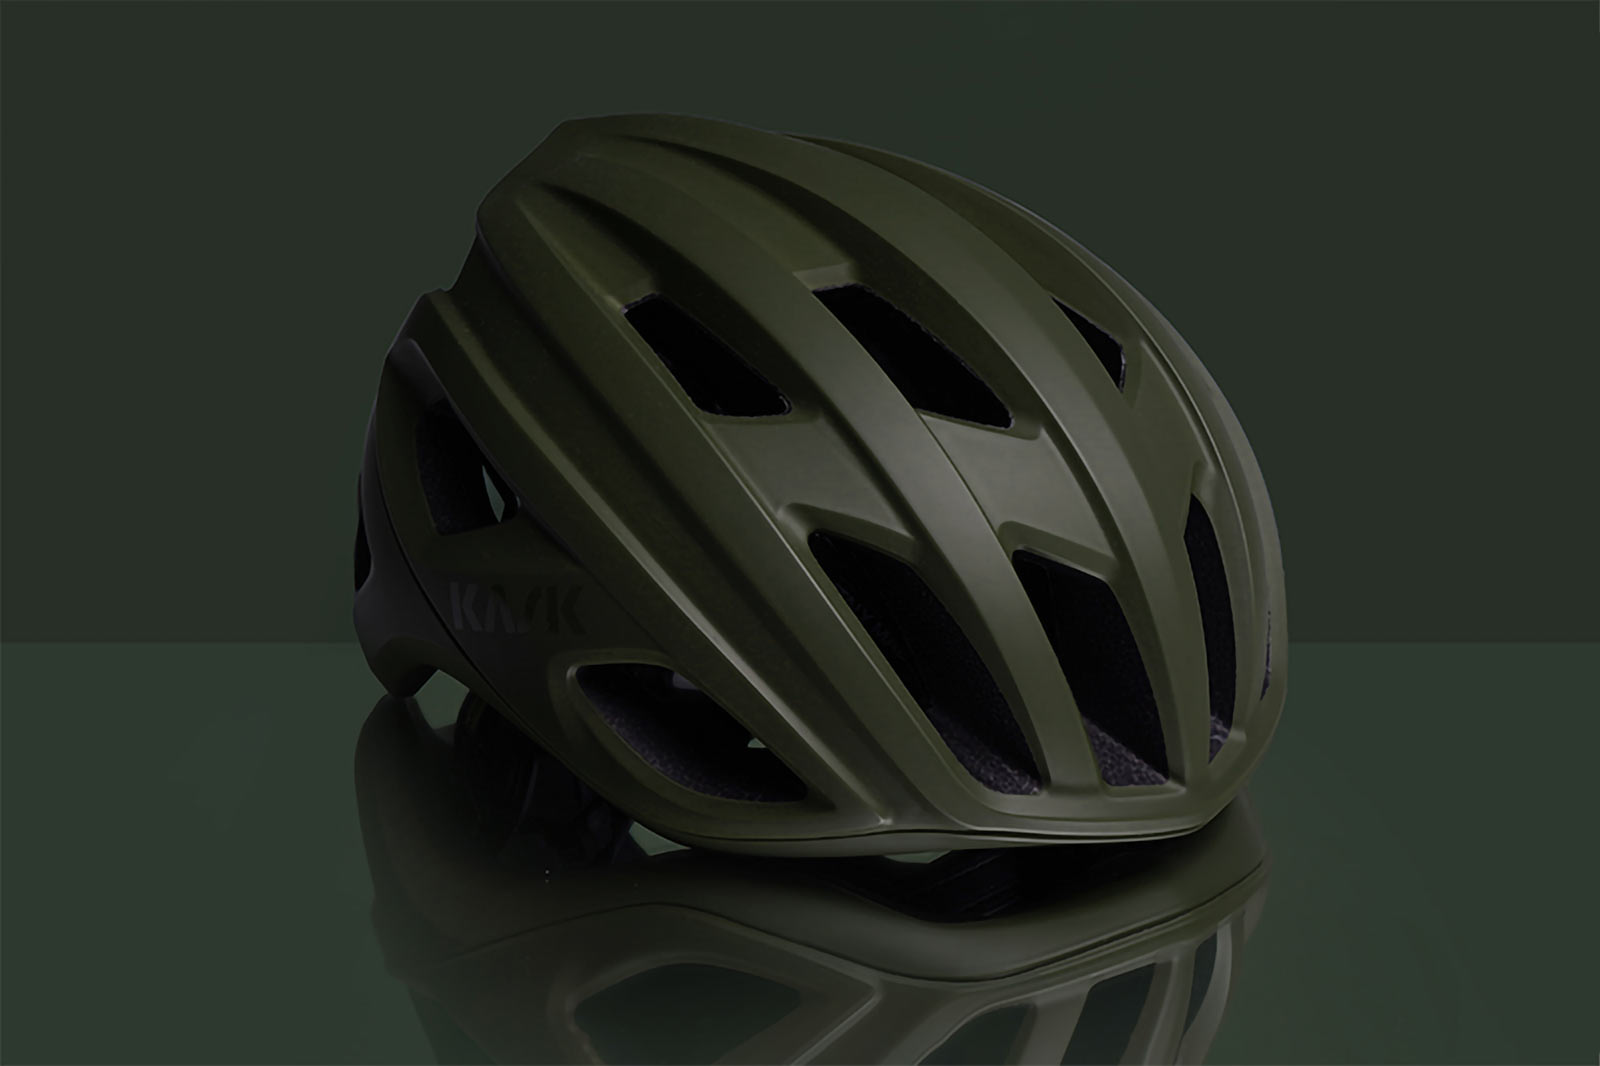 kask mojito3 matte olive green road gravel bike helmet